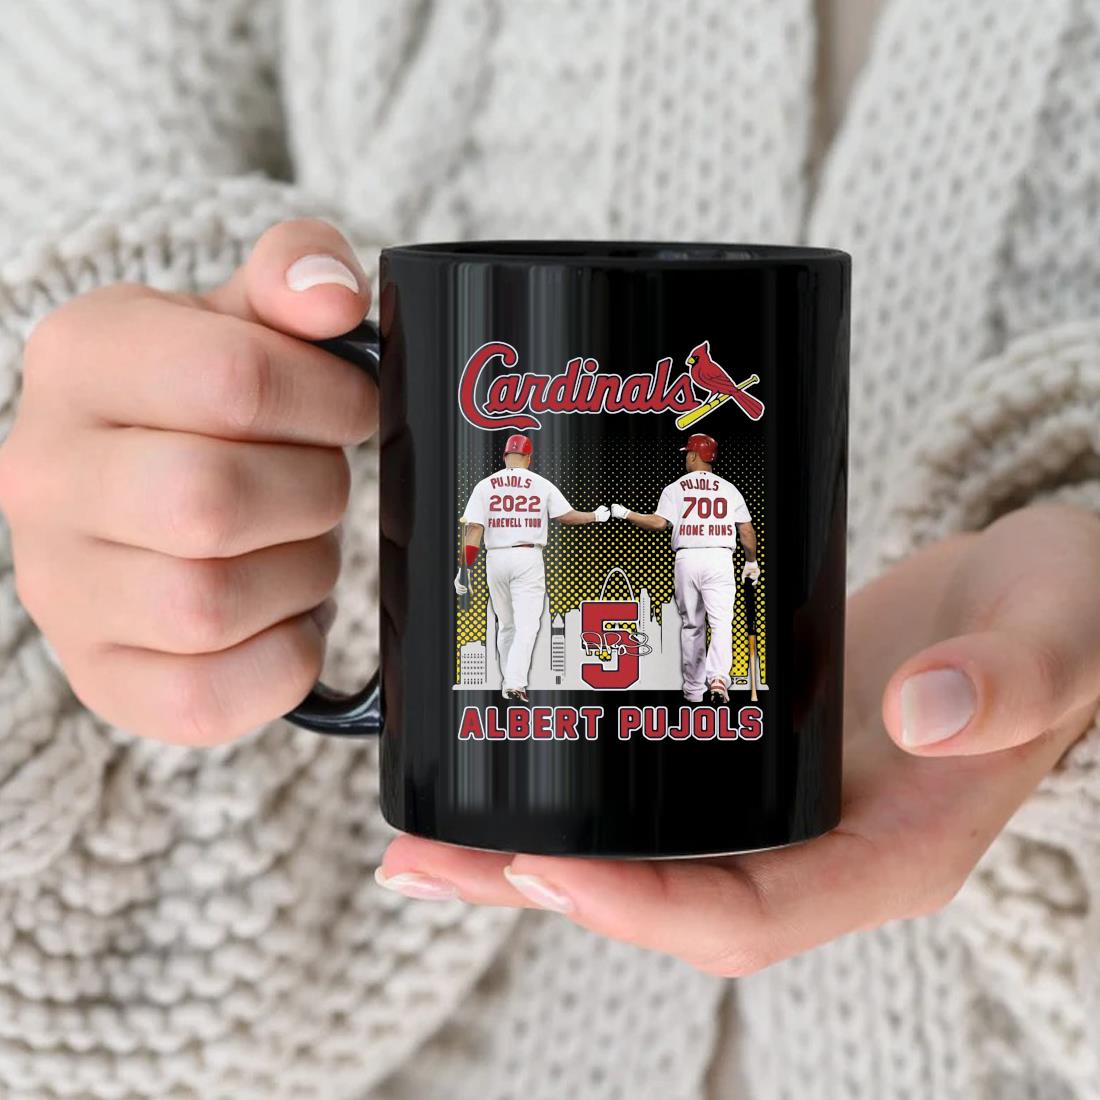 St Louis Cardinals Albert Pujols 2022 Farewell Tour 700 Home Runs Signature Mug